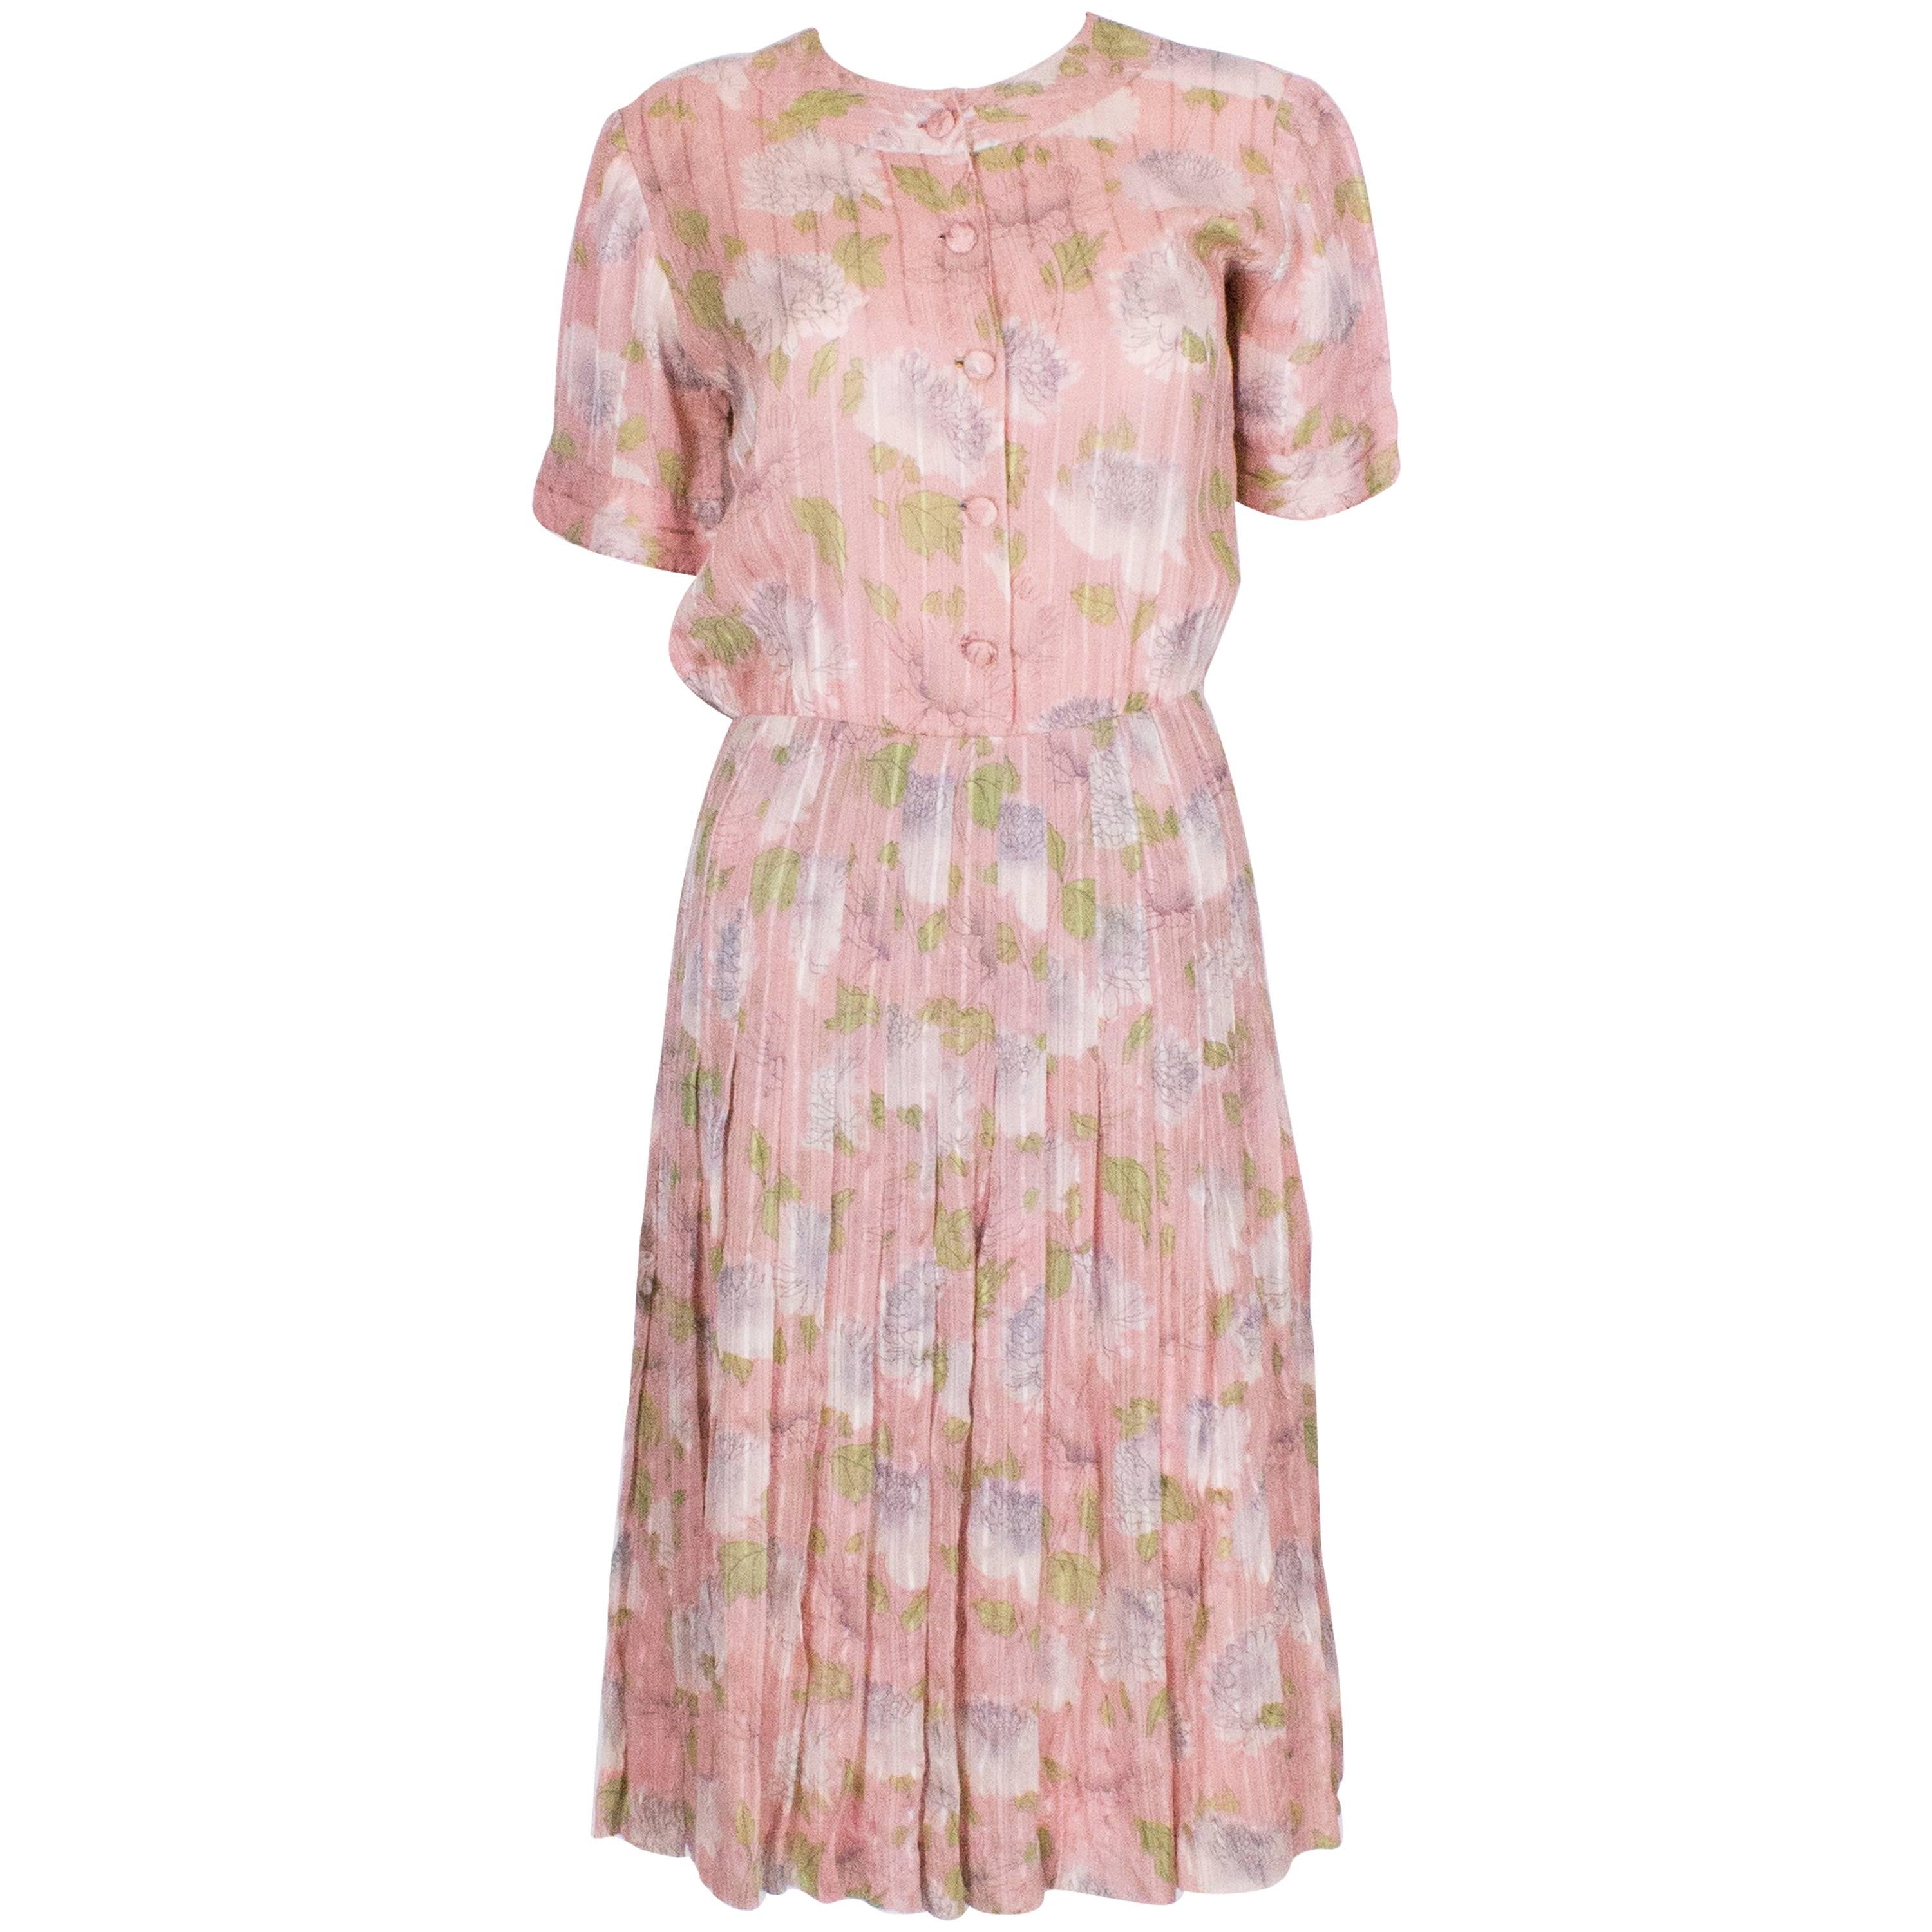 A vintage 1940s floral print, pink summer cotton day dress